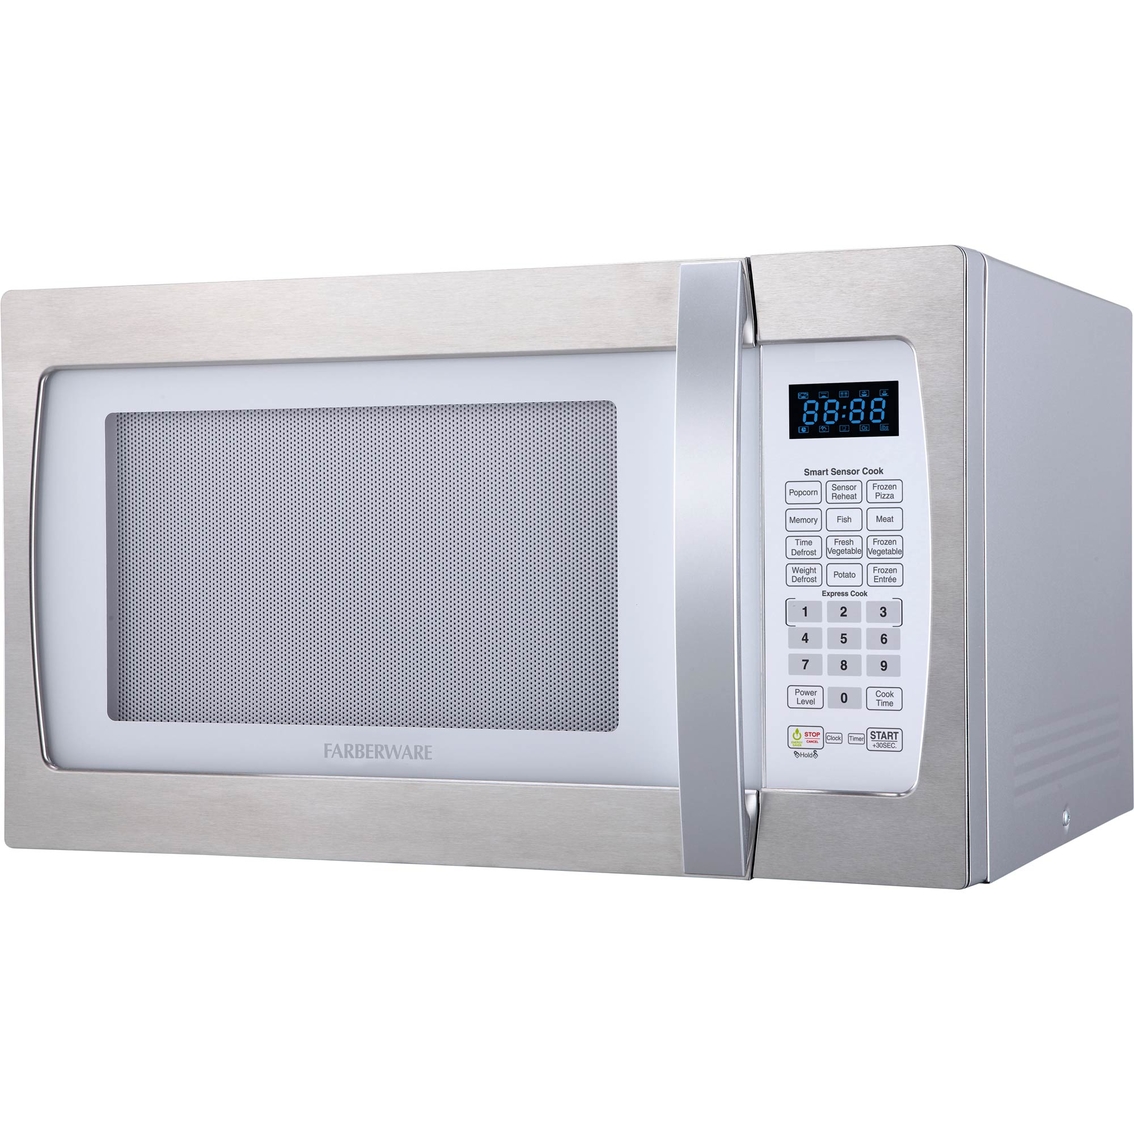 Farberware Professional 1.3 cu. ft. 1100 Watt Microwave Oven - Image 2 of 8